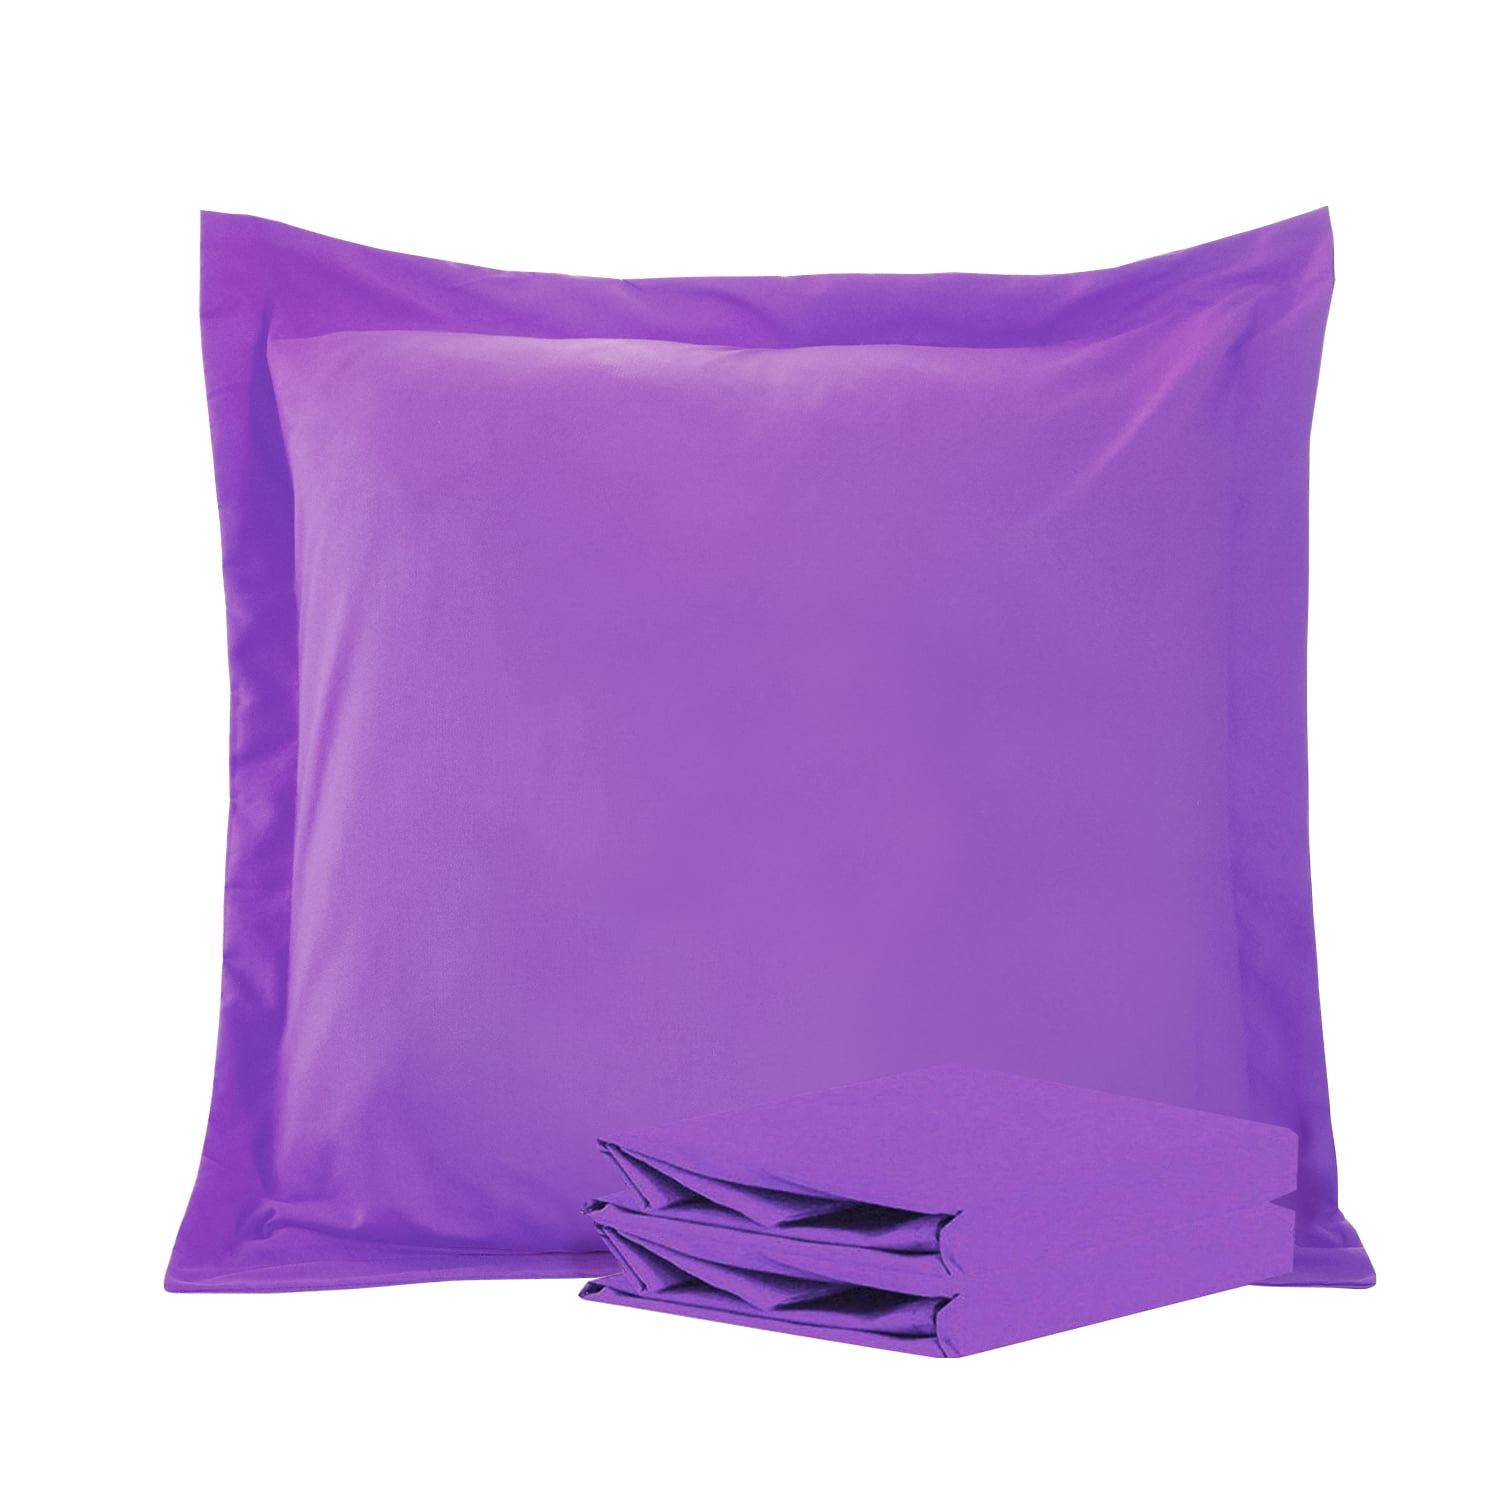 Solid Purple Cover Case Decorative Pillow 26" x 26" 2 Piece Euro Ruffled Shams 